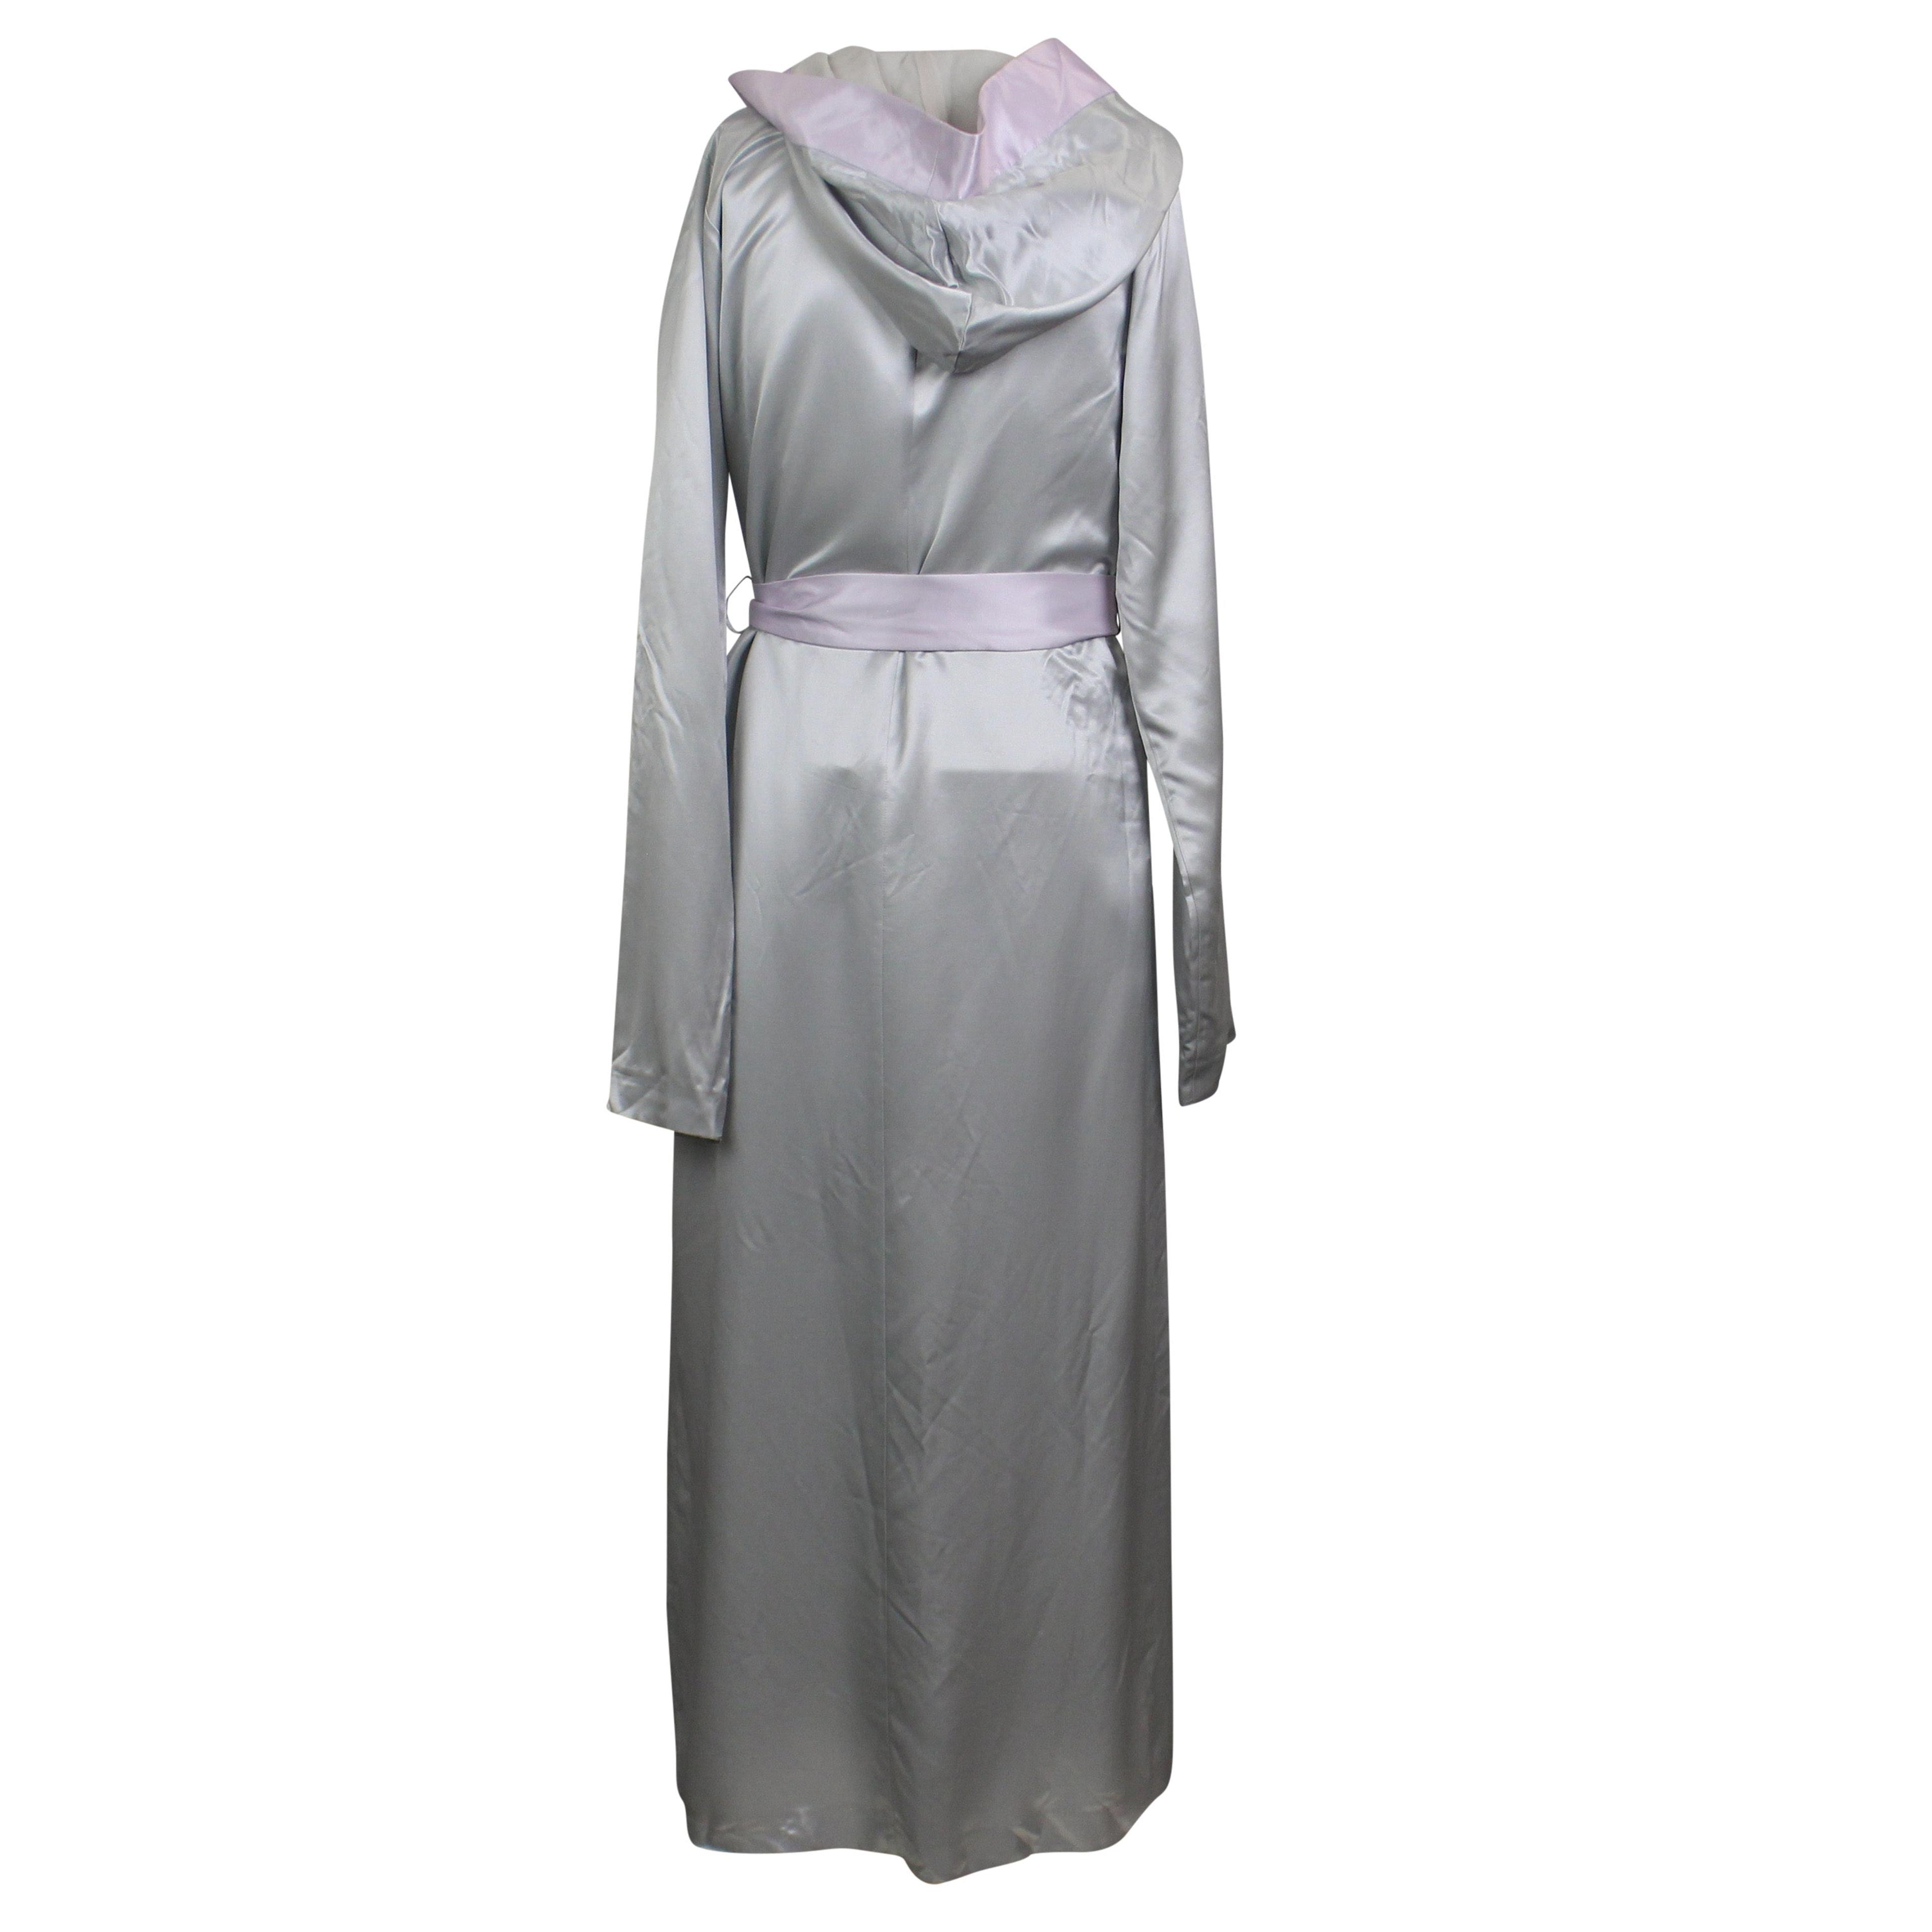 Alternate View 3 of Light Gray Silk Long Boxing Robe Dress